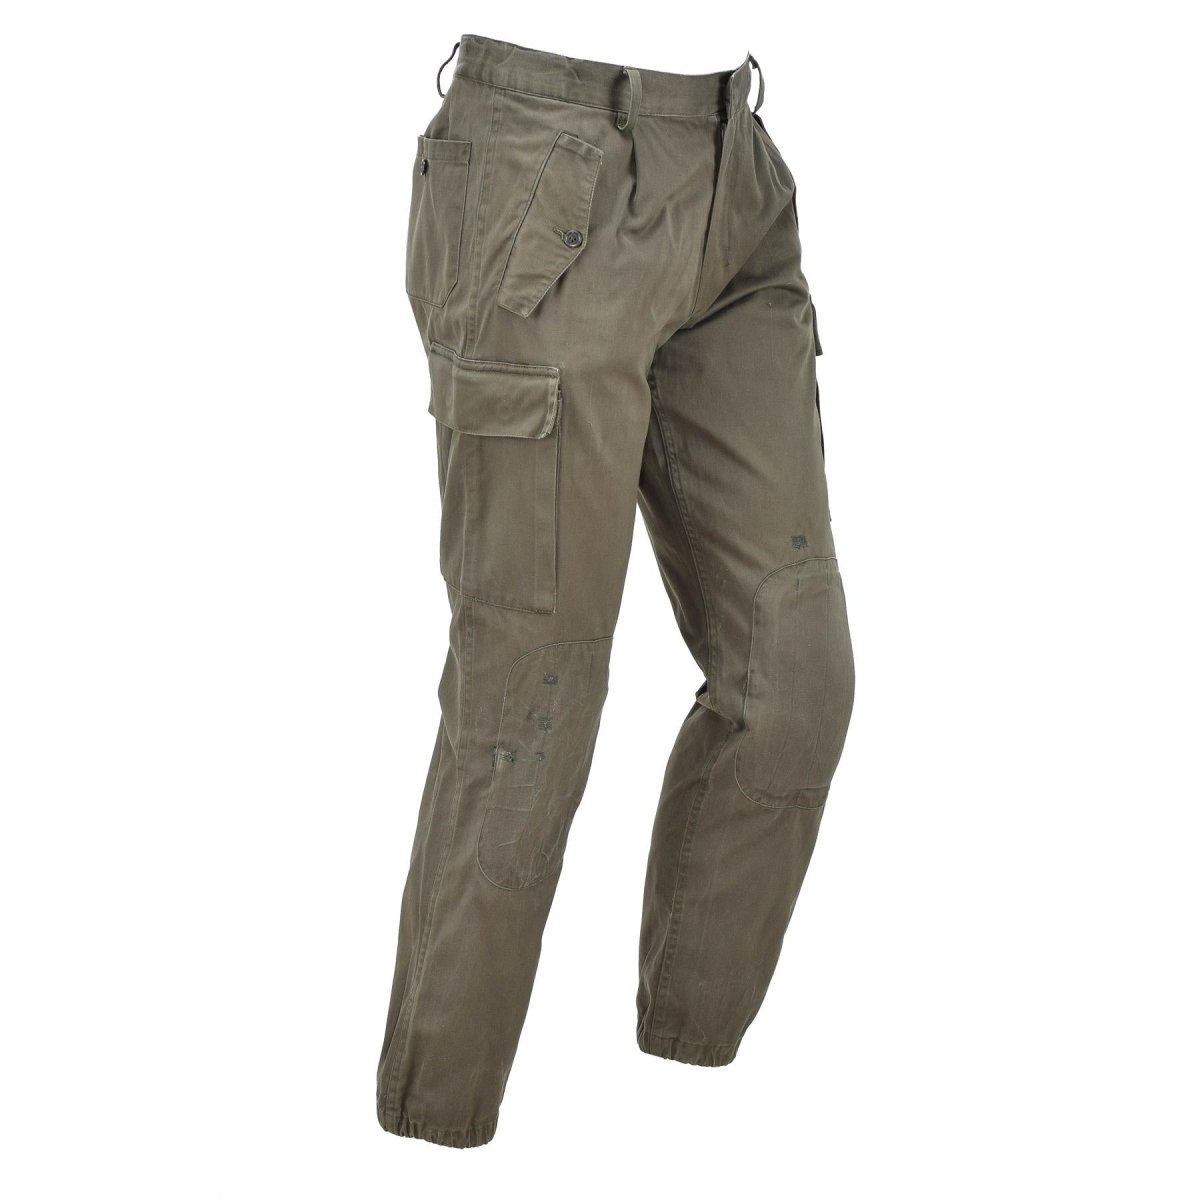 Original Italian military work pants reinforced workwear uniform cargo ...